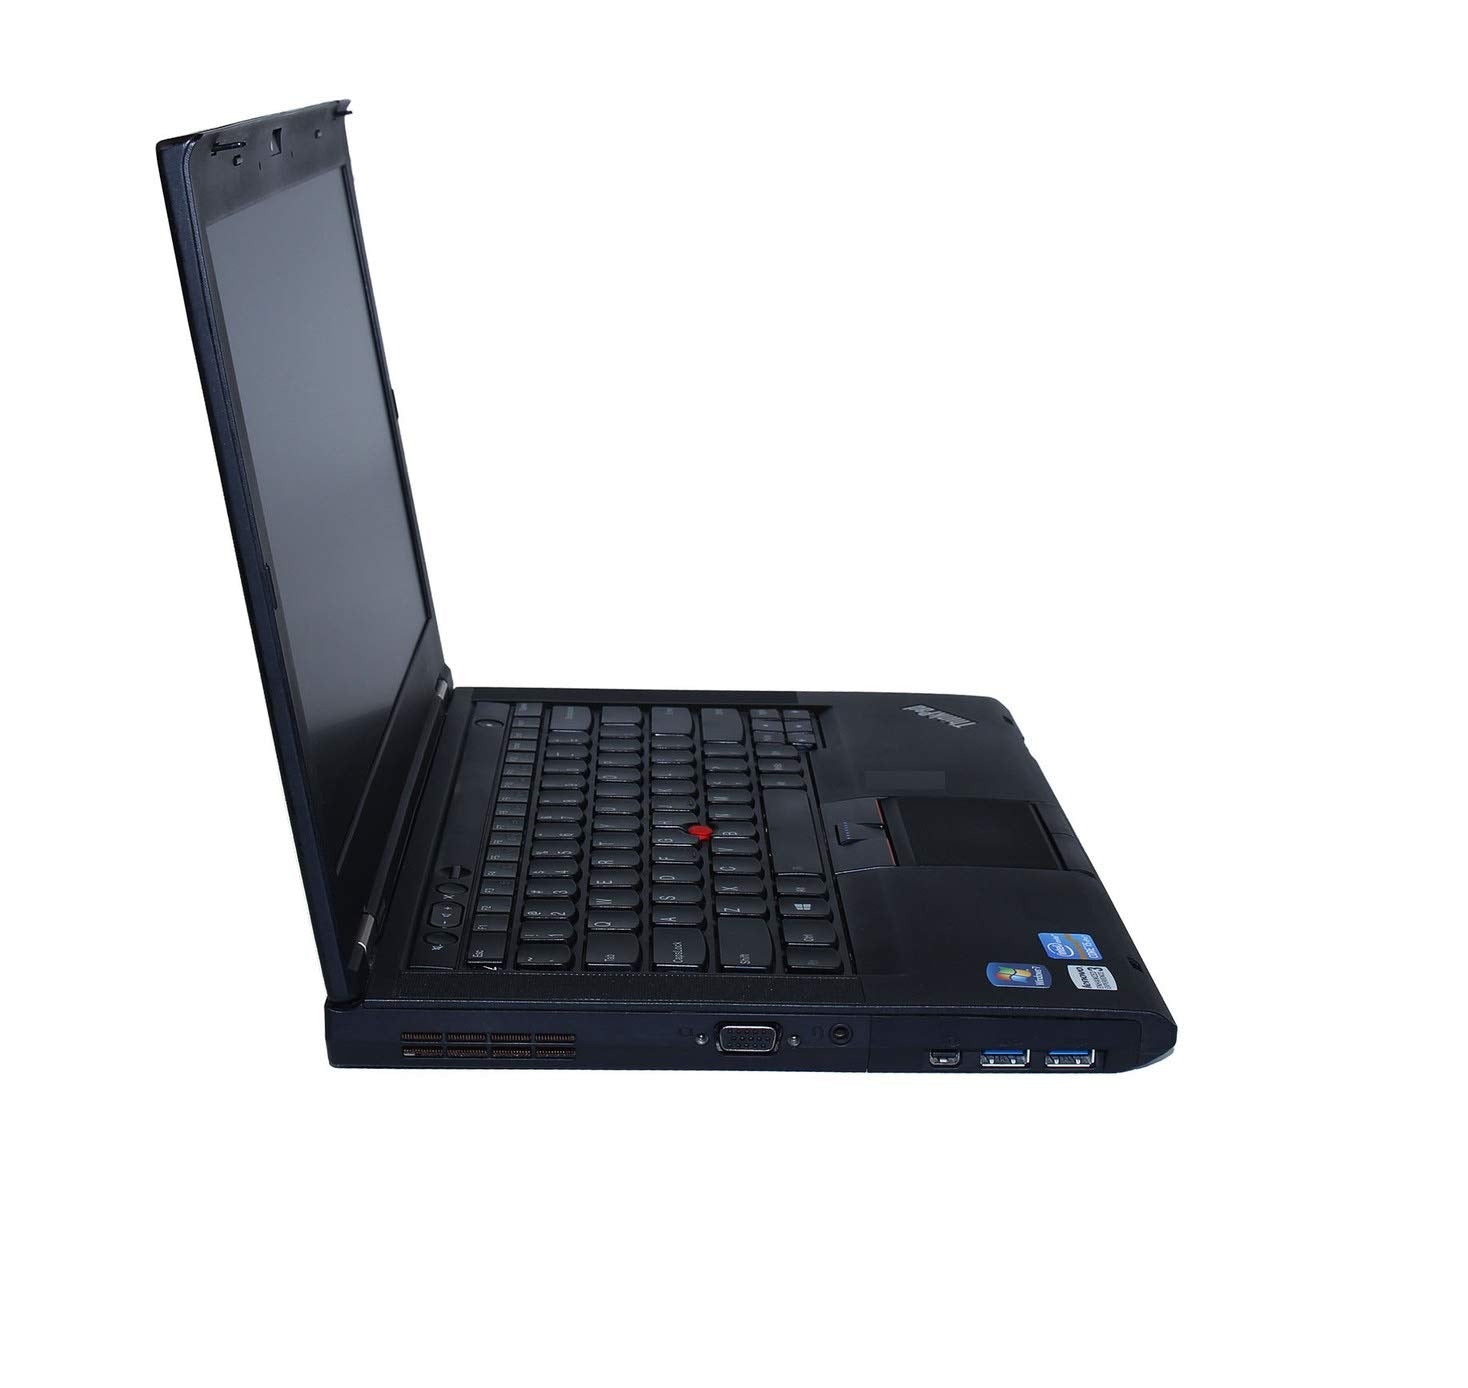 Refurbished Lenovo Thinkpad T430 i5 Laptop, 3rd Gen, 4GB Ram, 256GB SSD